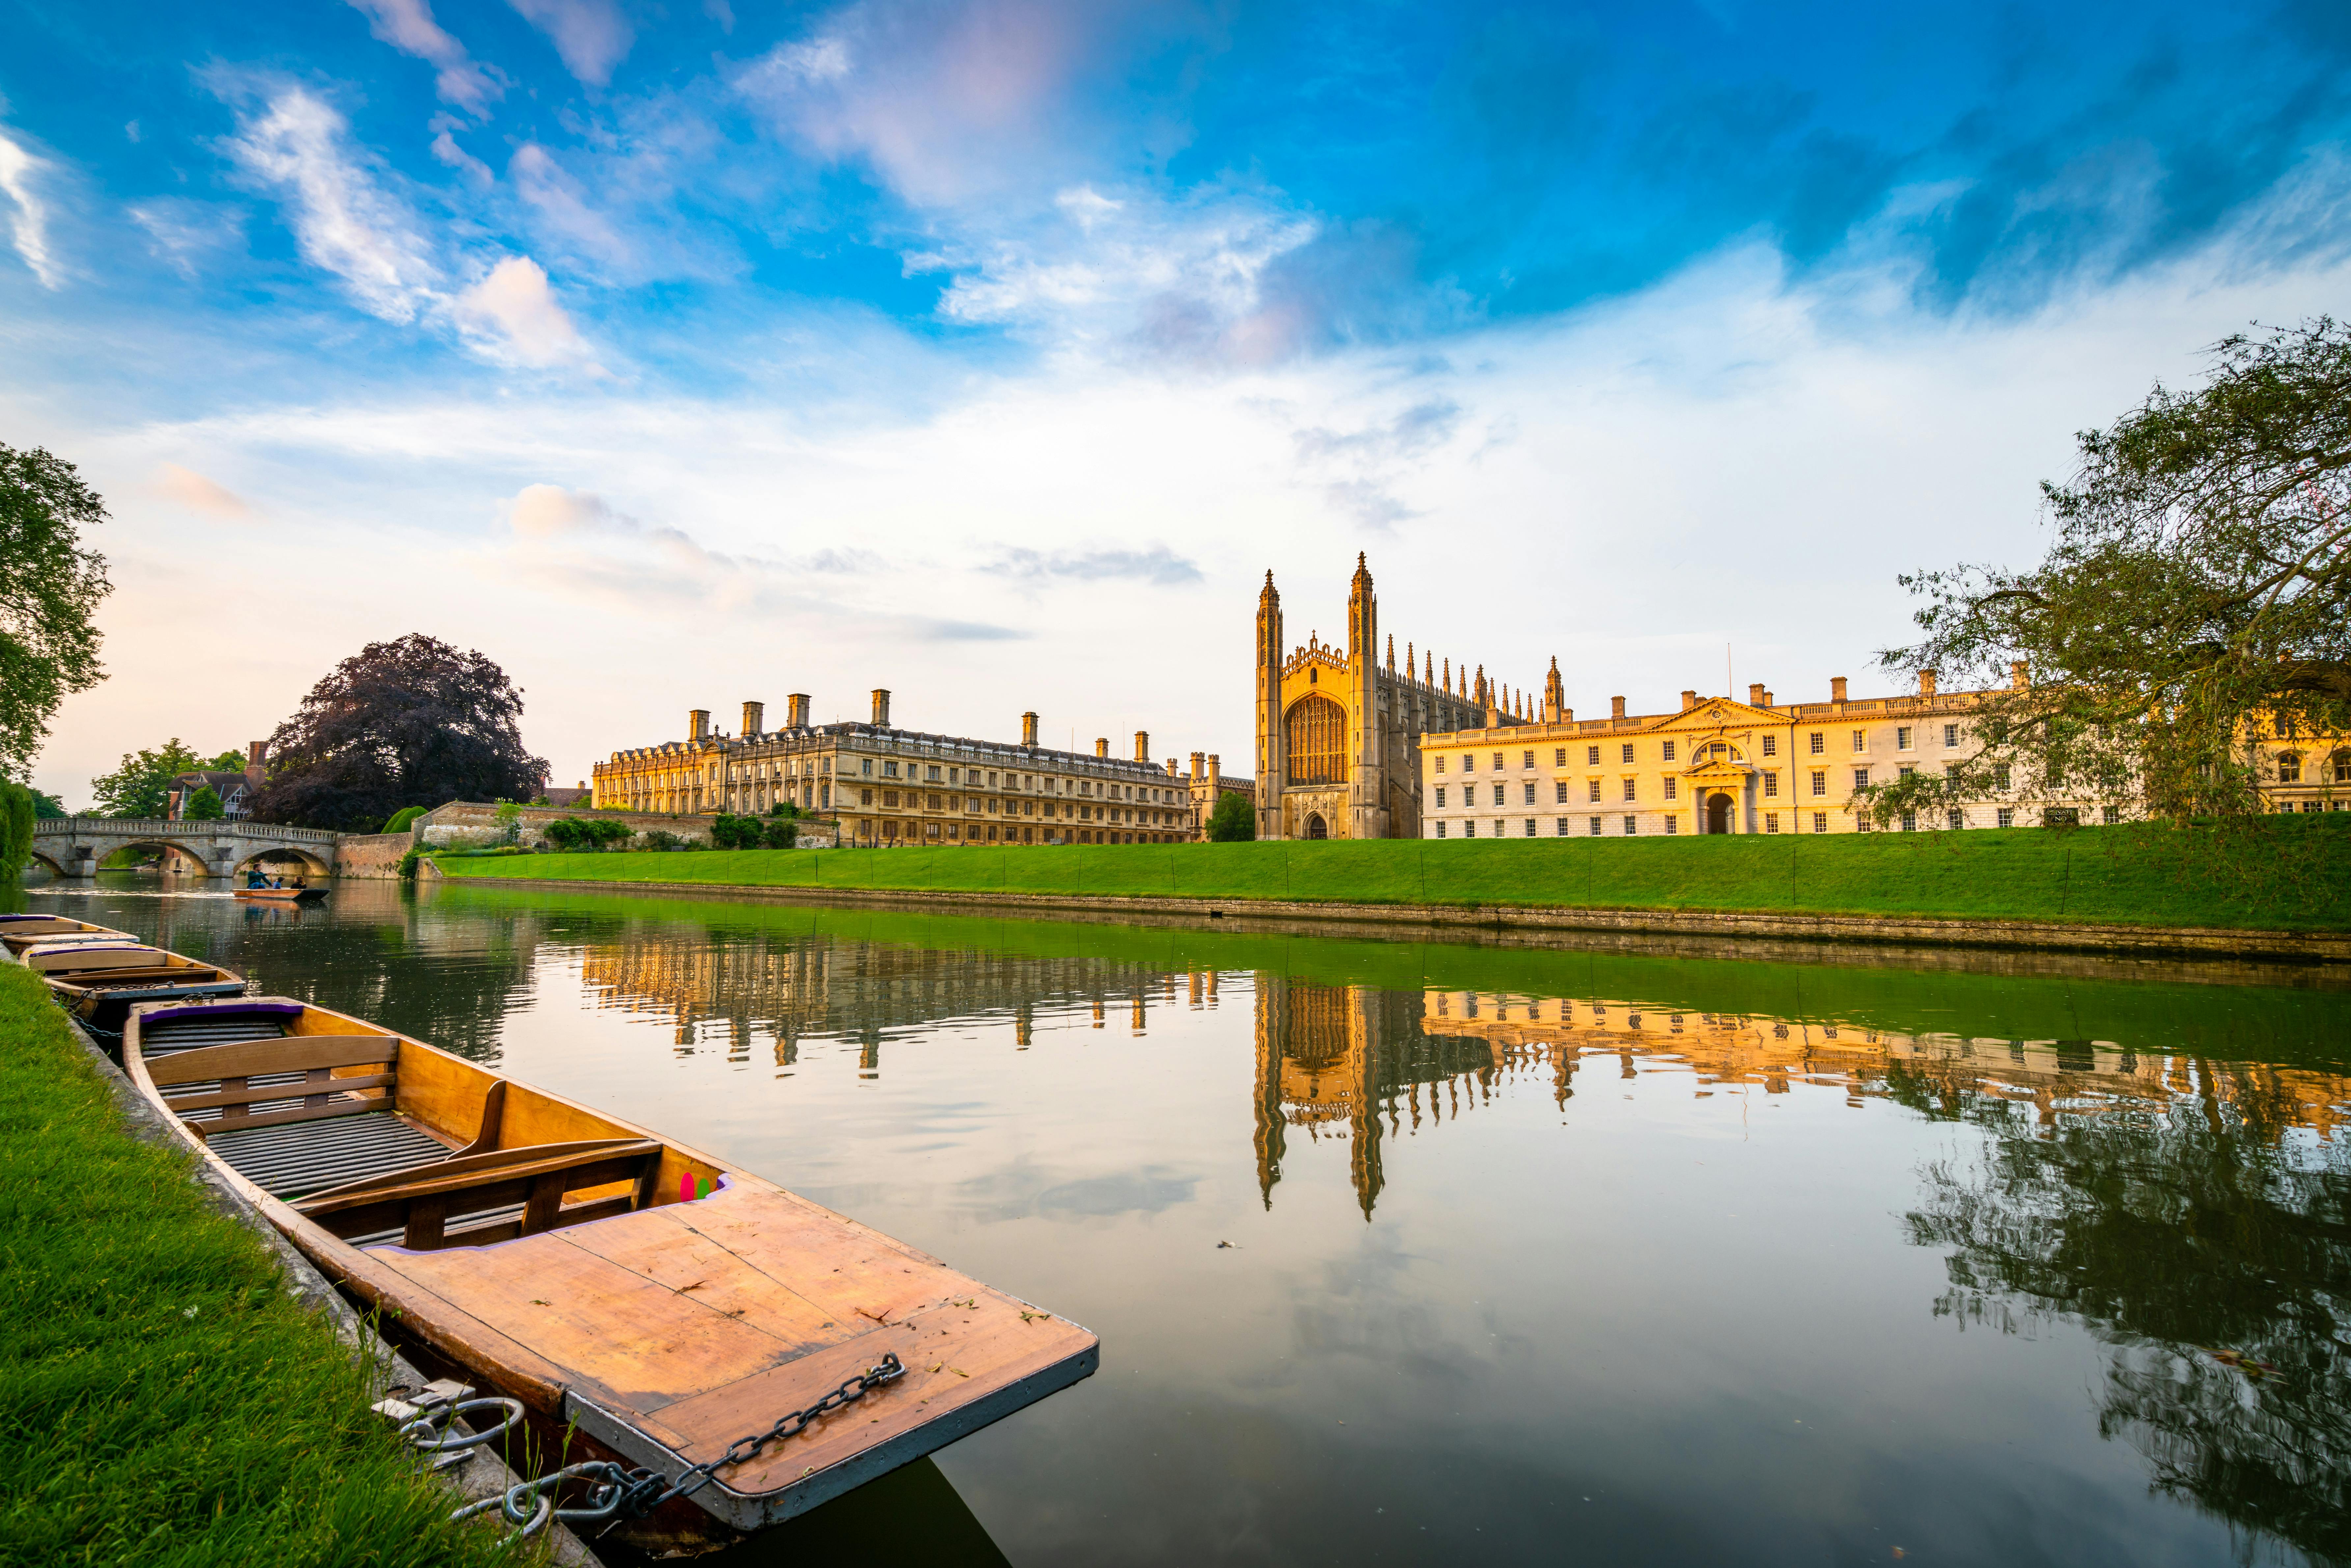 Private Cambridge University punting tour